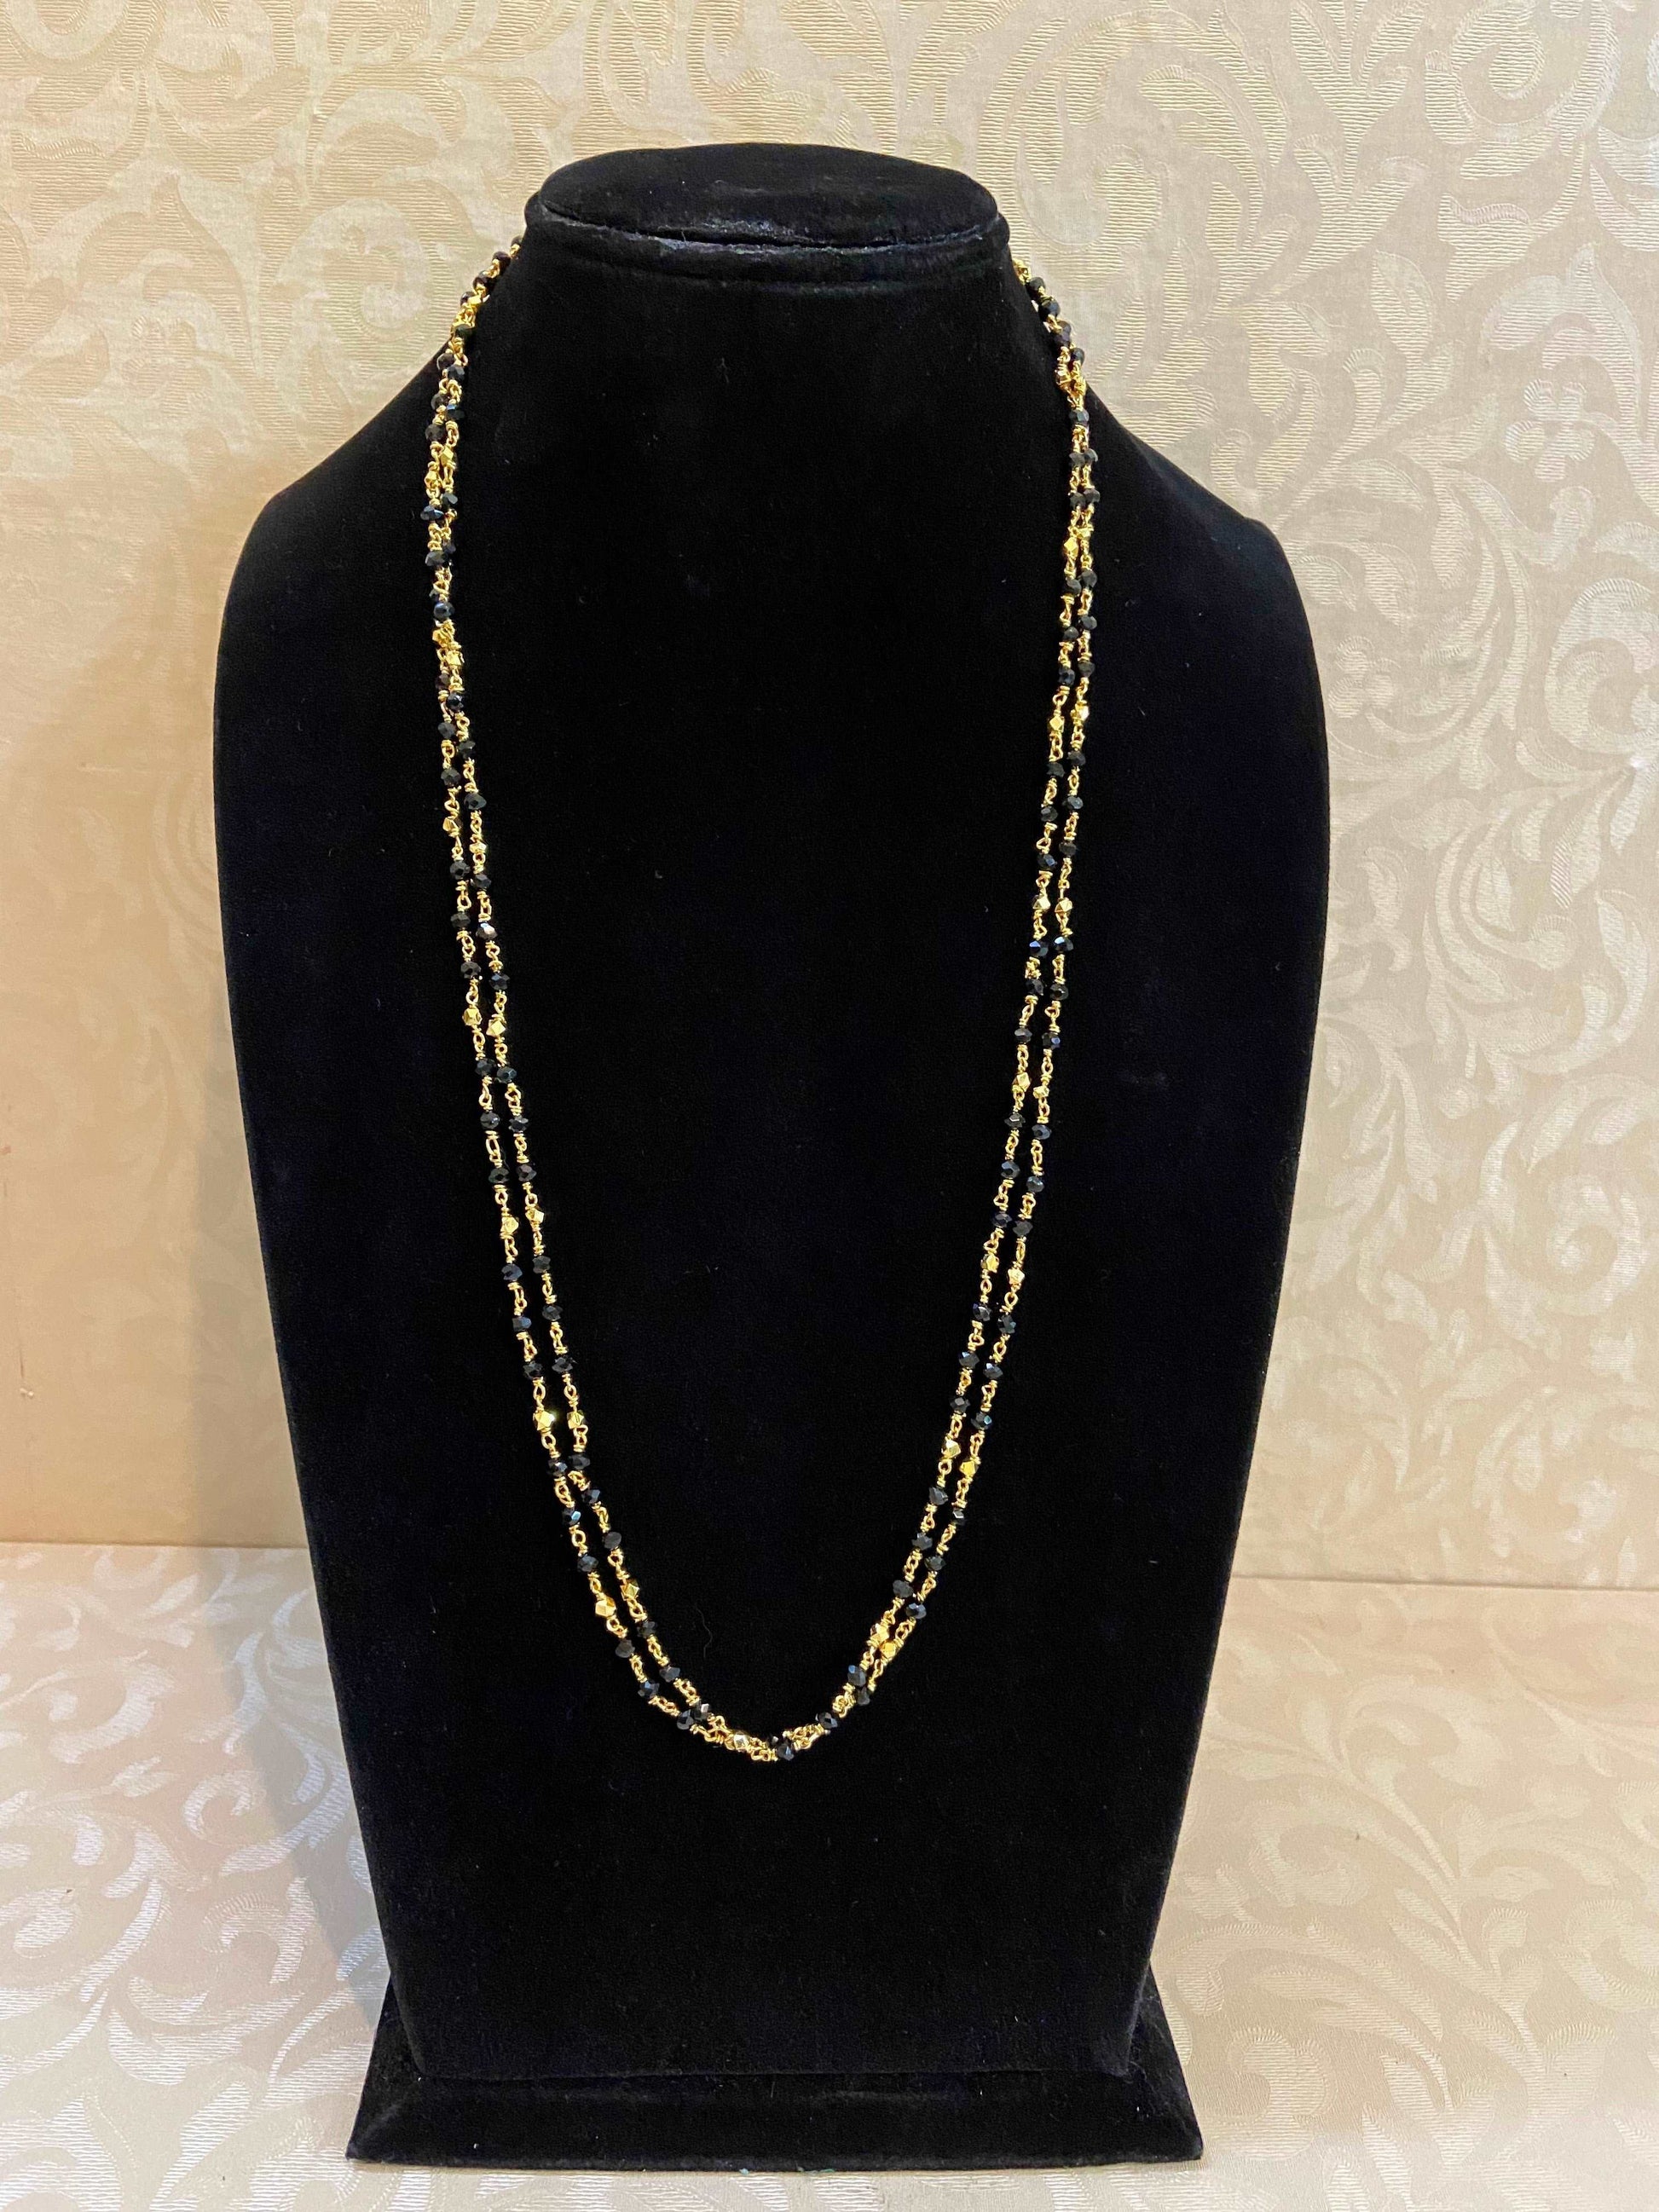 30” black beads chain